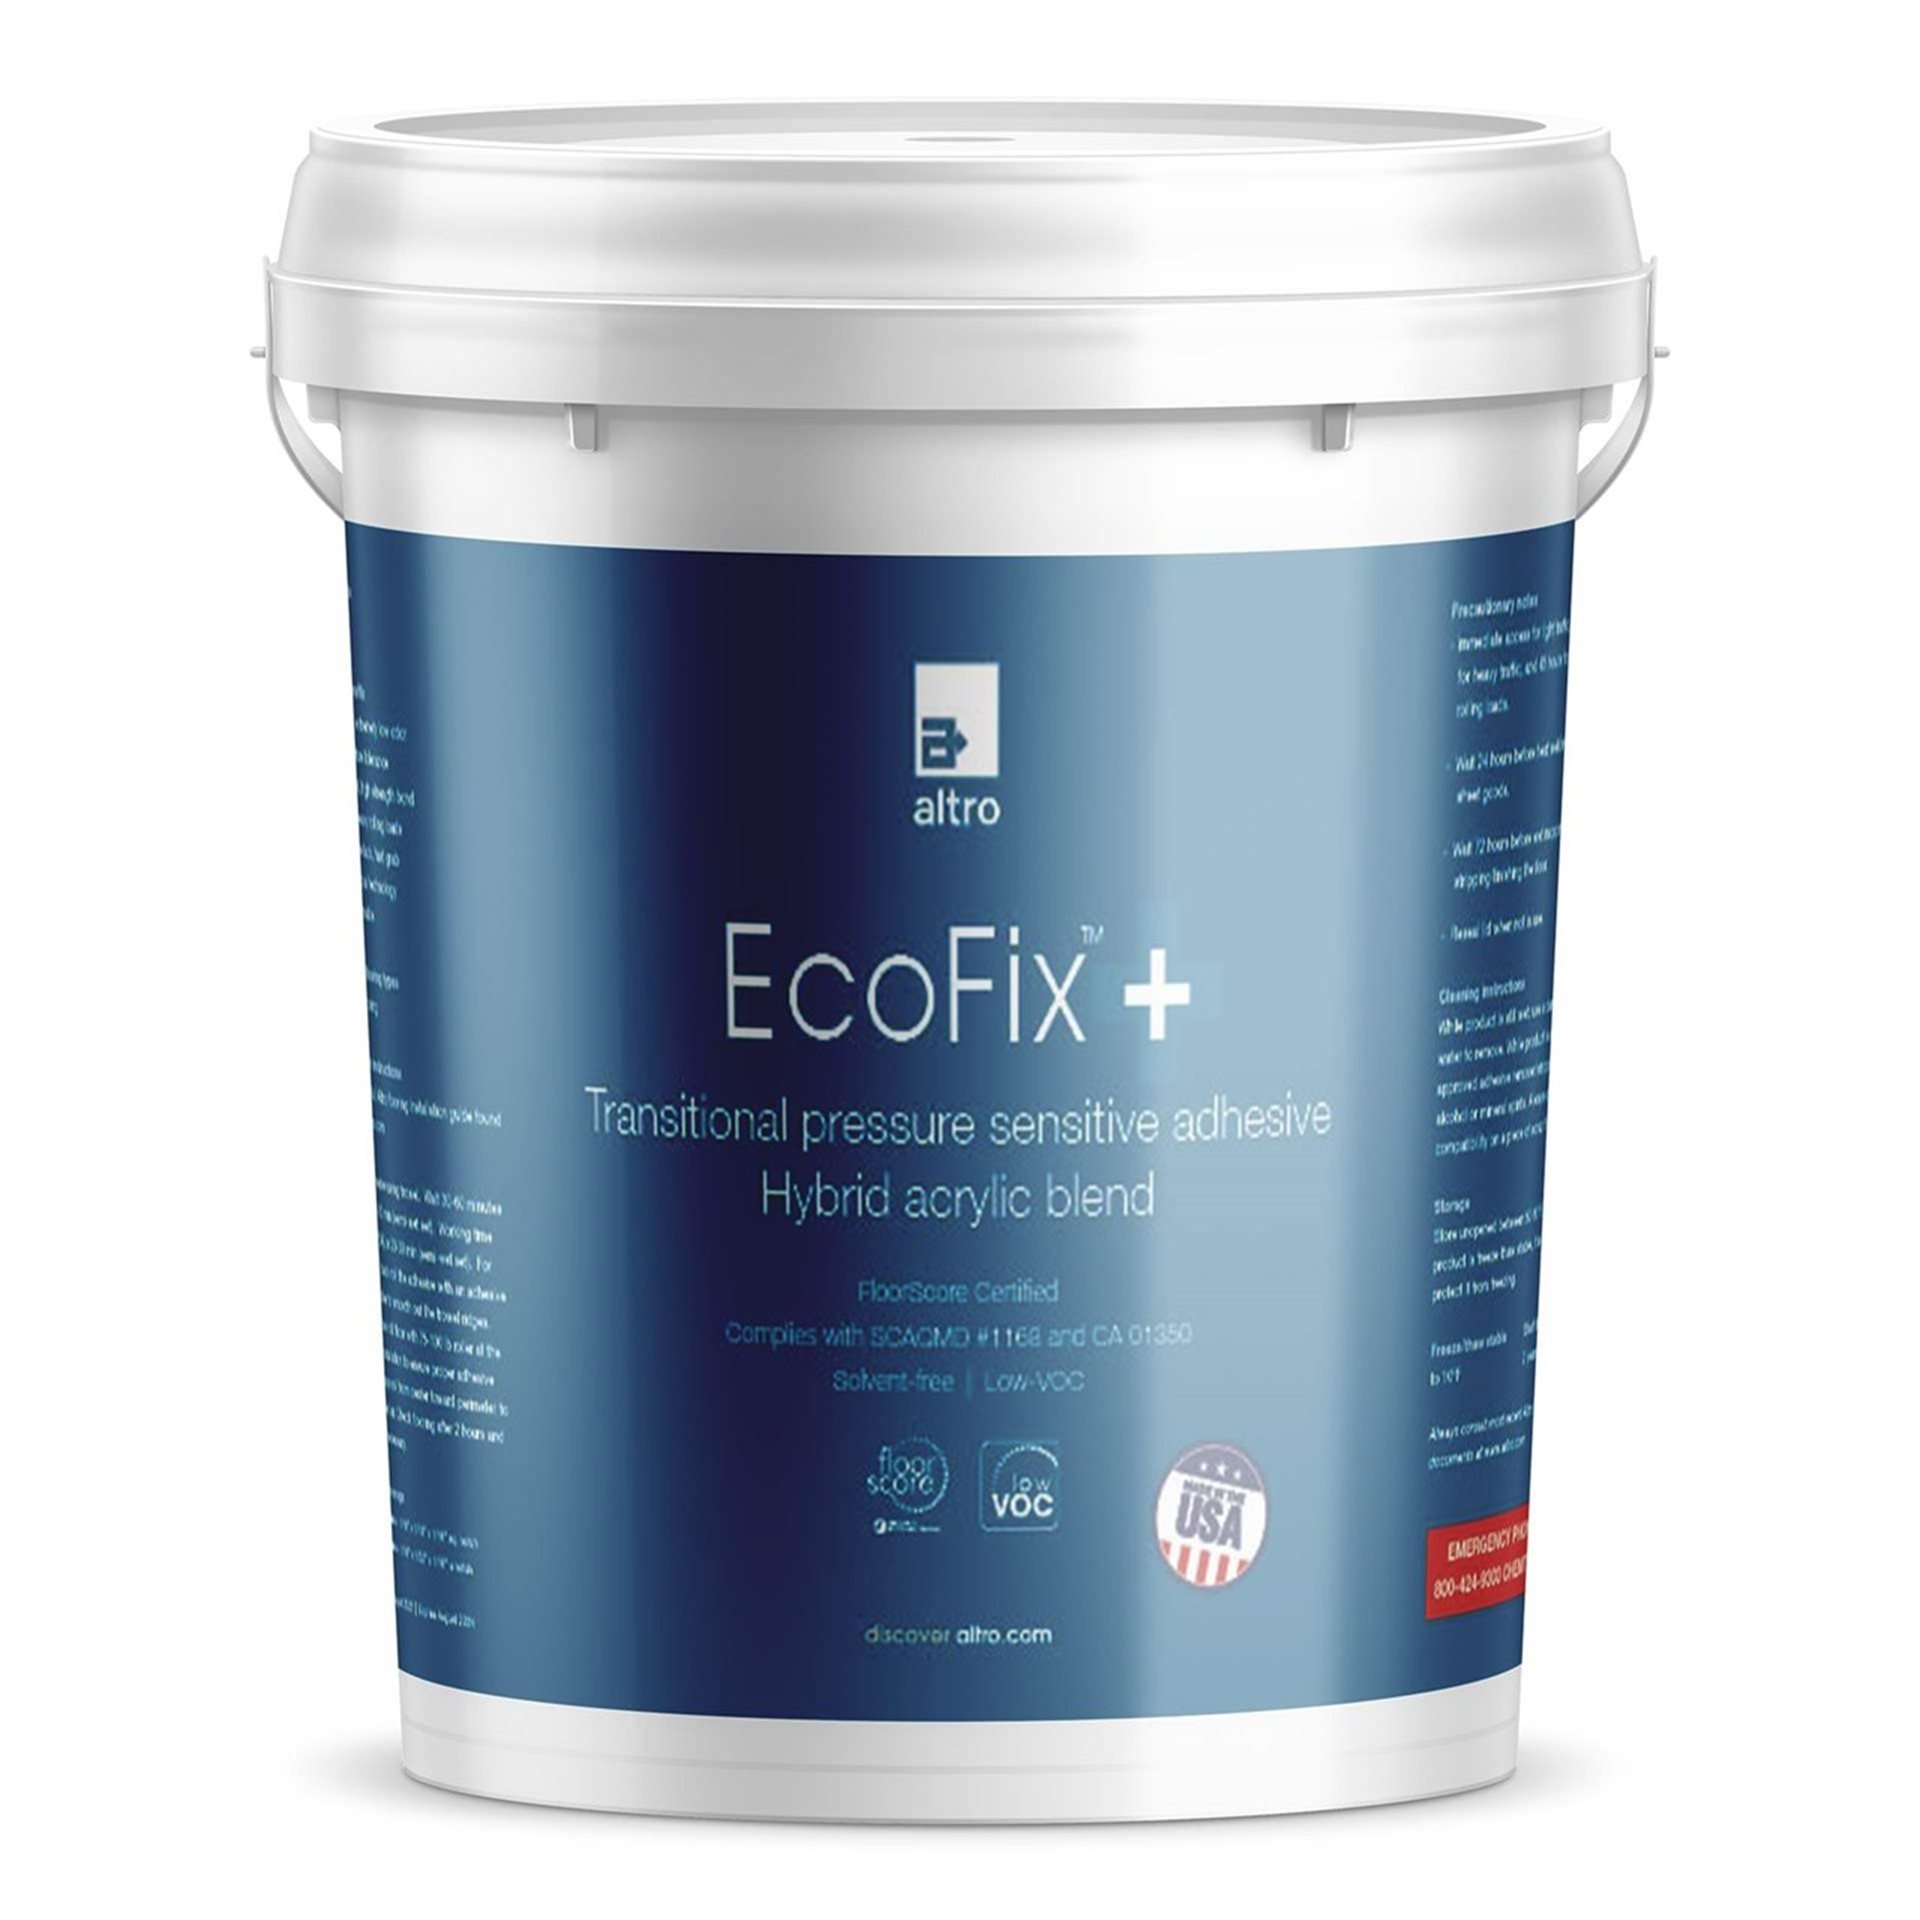 Altro EcoFix+ container